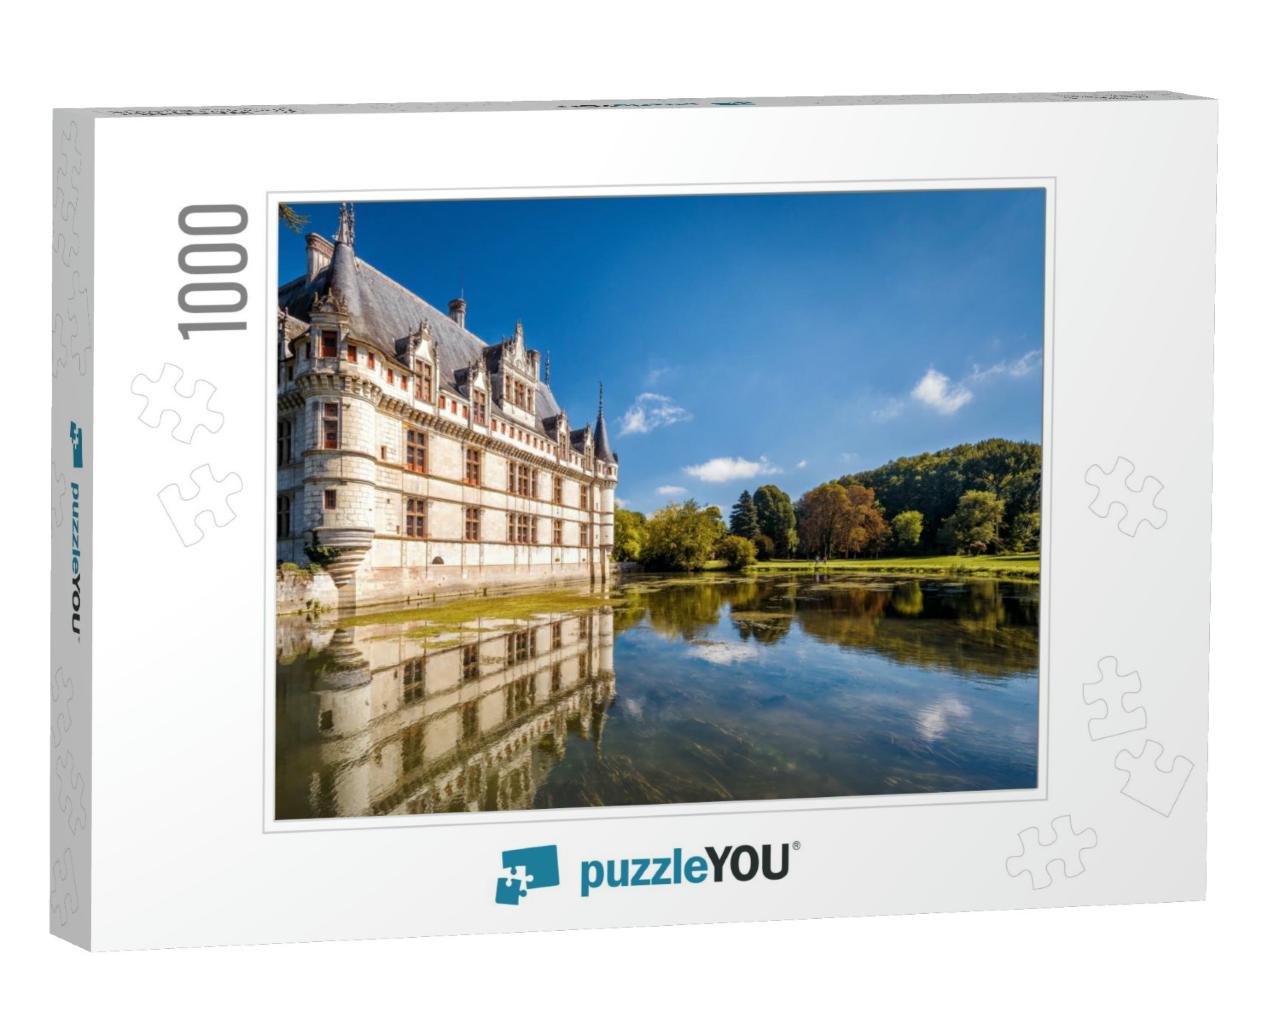 Castle or Chateau Dazay-Le-Rideau, France. This Castle is... Jigsaw Puzzle with 1000 pieces